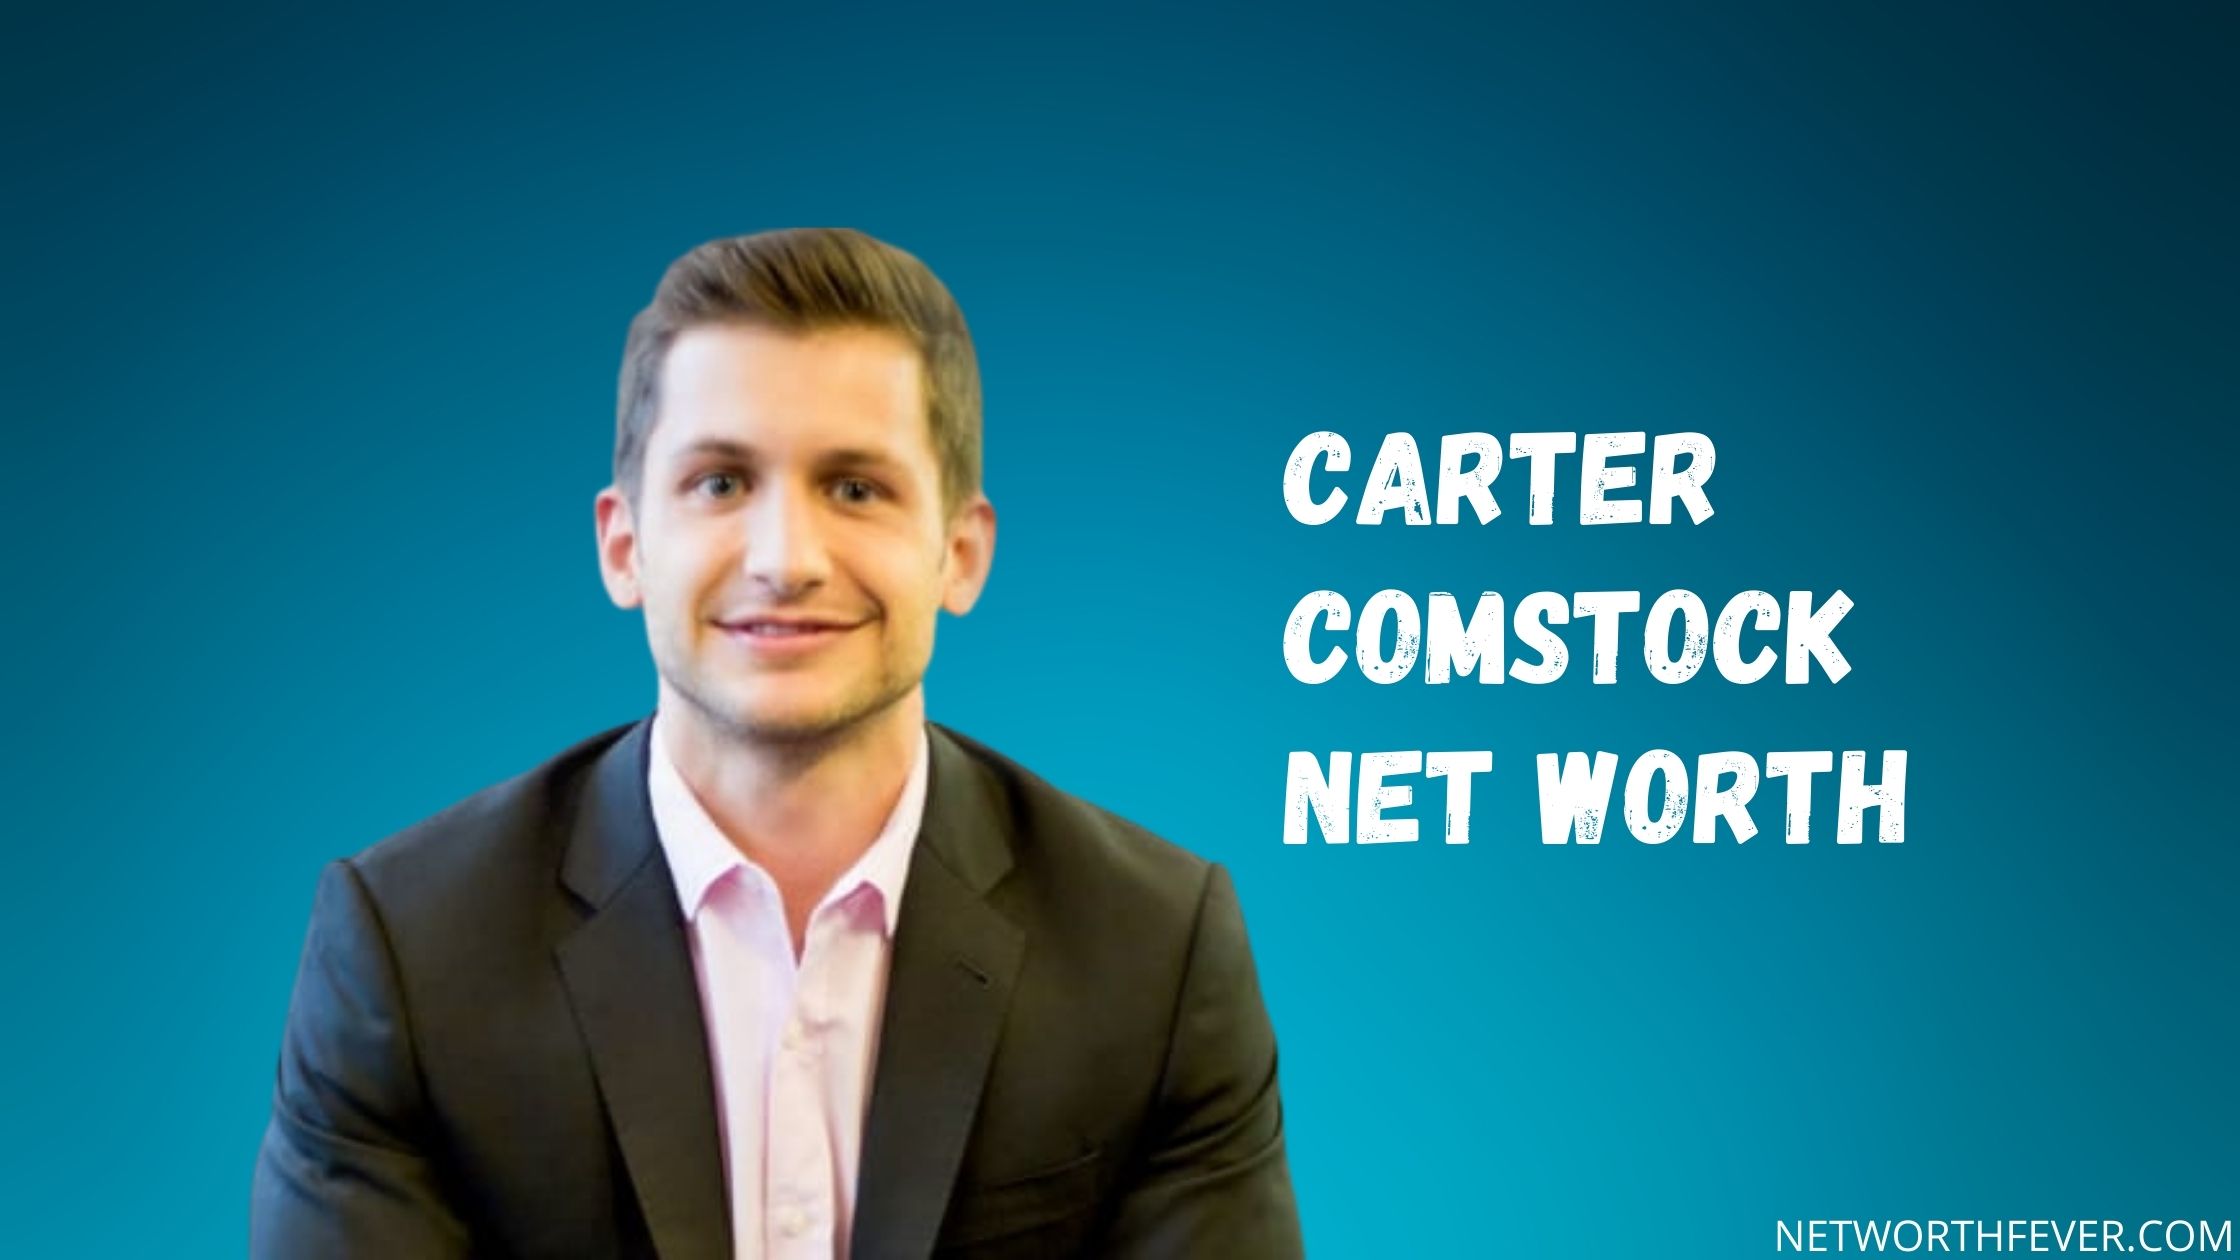 Carter Comstock net worth